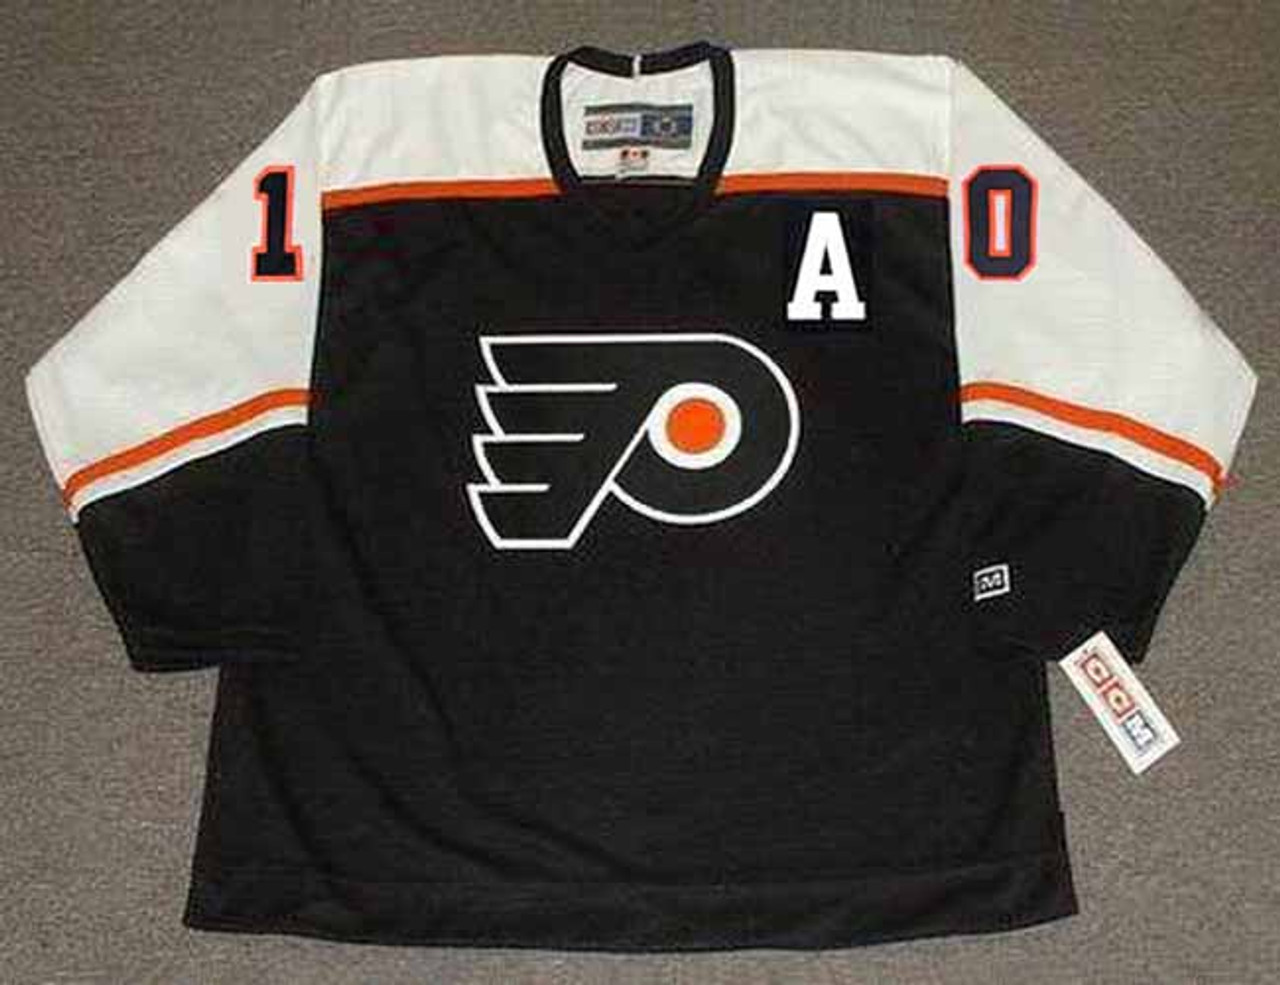 2002-03 John Leclair Philadelphia Flyers Game Worn Jersey